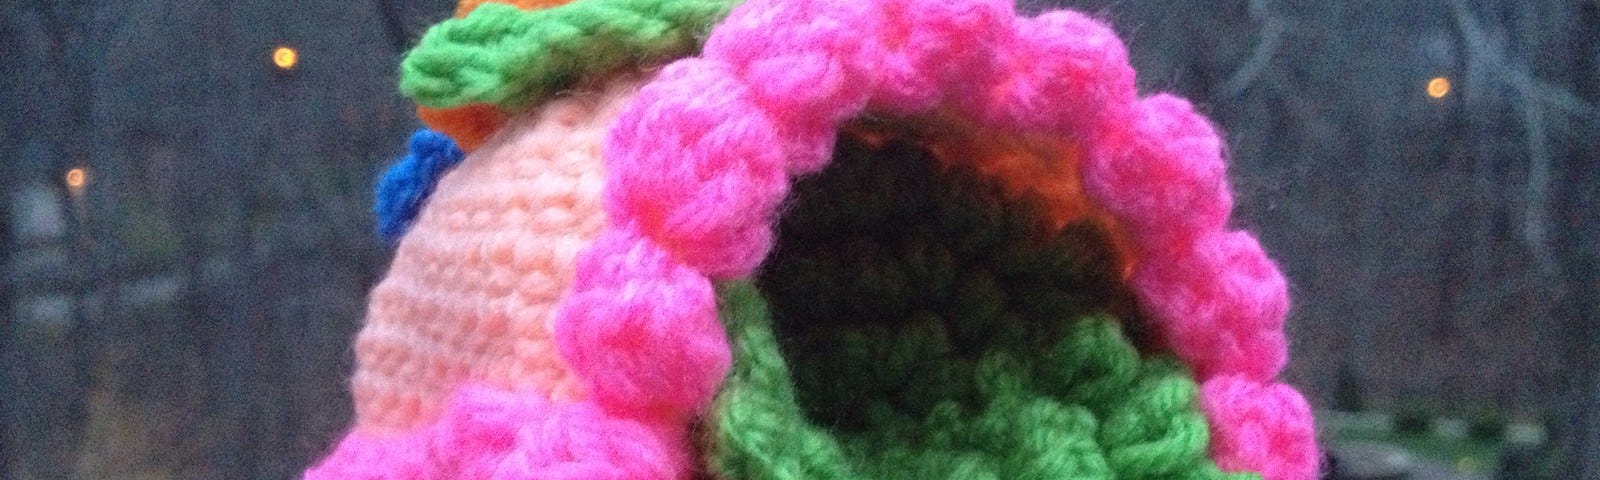 A crochet sugar egg with crochet flowers, trim, and grass